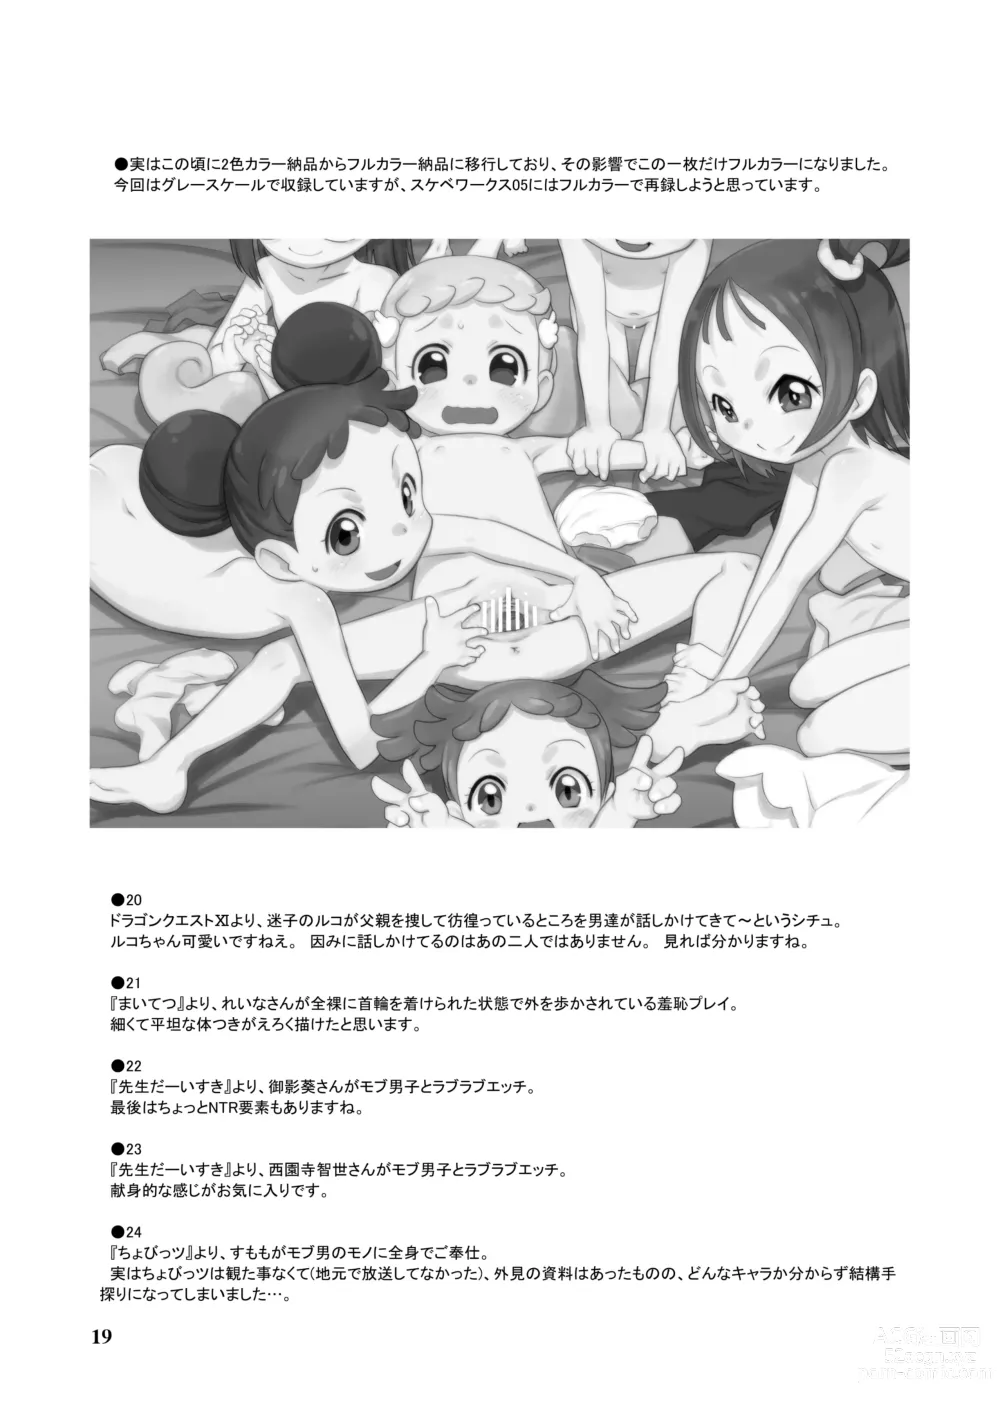 Page 18 of doujinshi Skeb-e Works 04